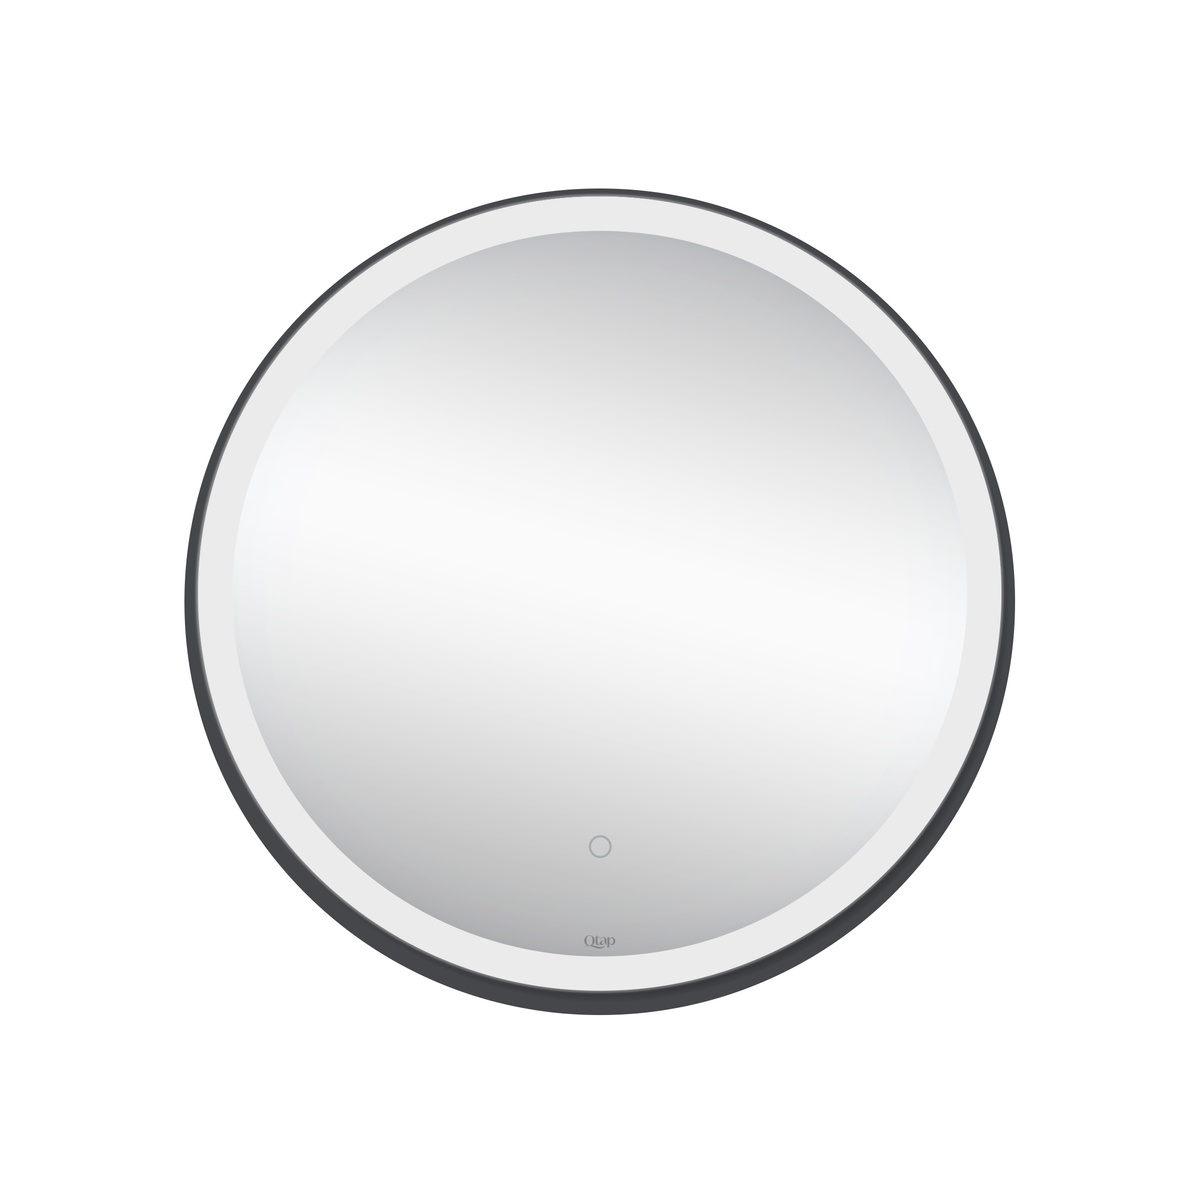 Зеркало круглое для ванной Q-TAP Robin 60x60см c подсветкой сенсорное включение антизапотевание QT13786501B